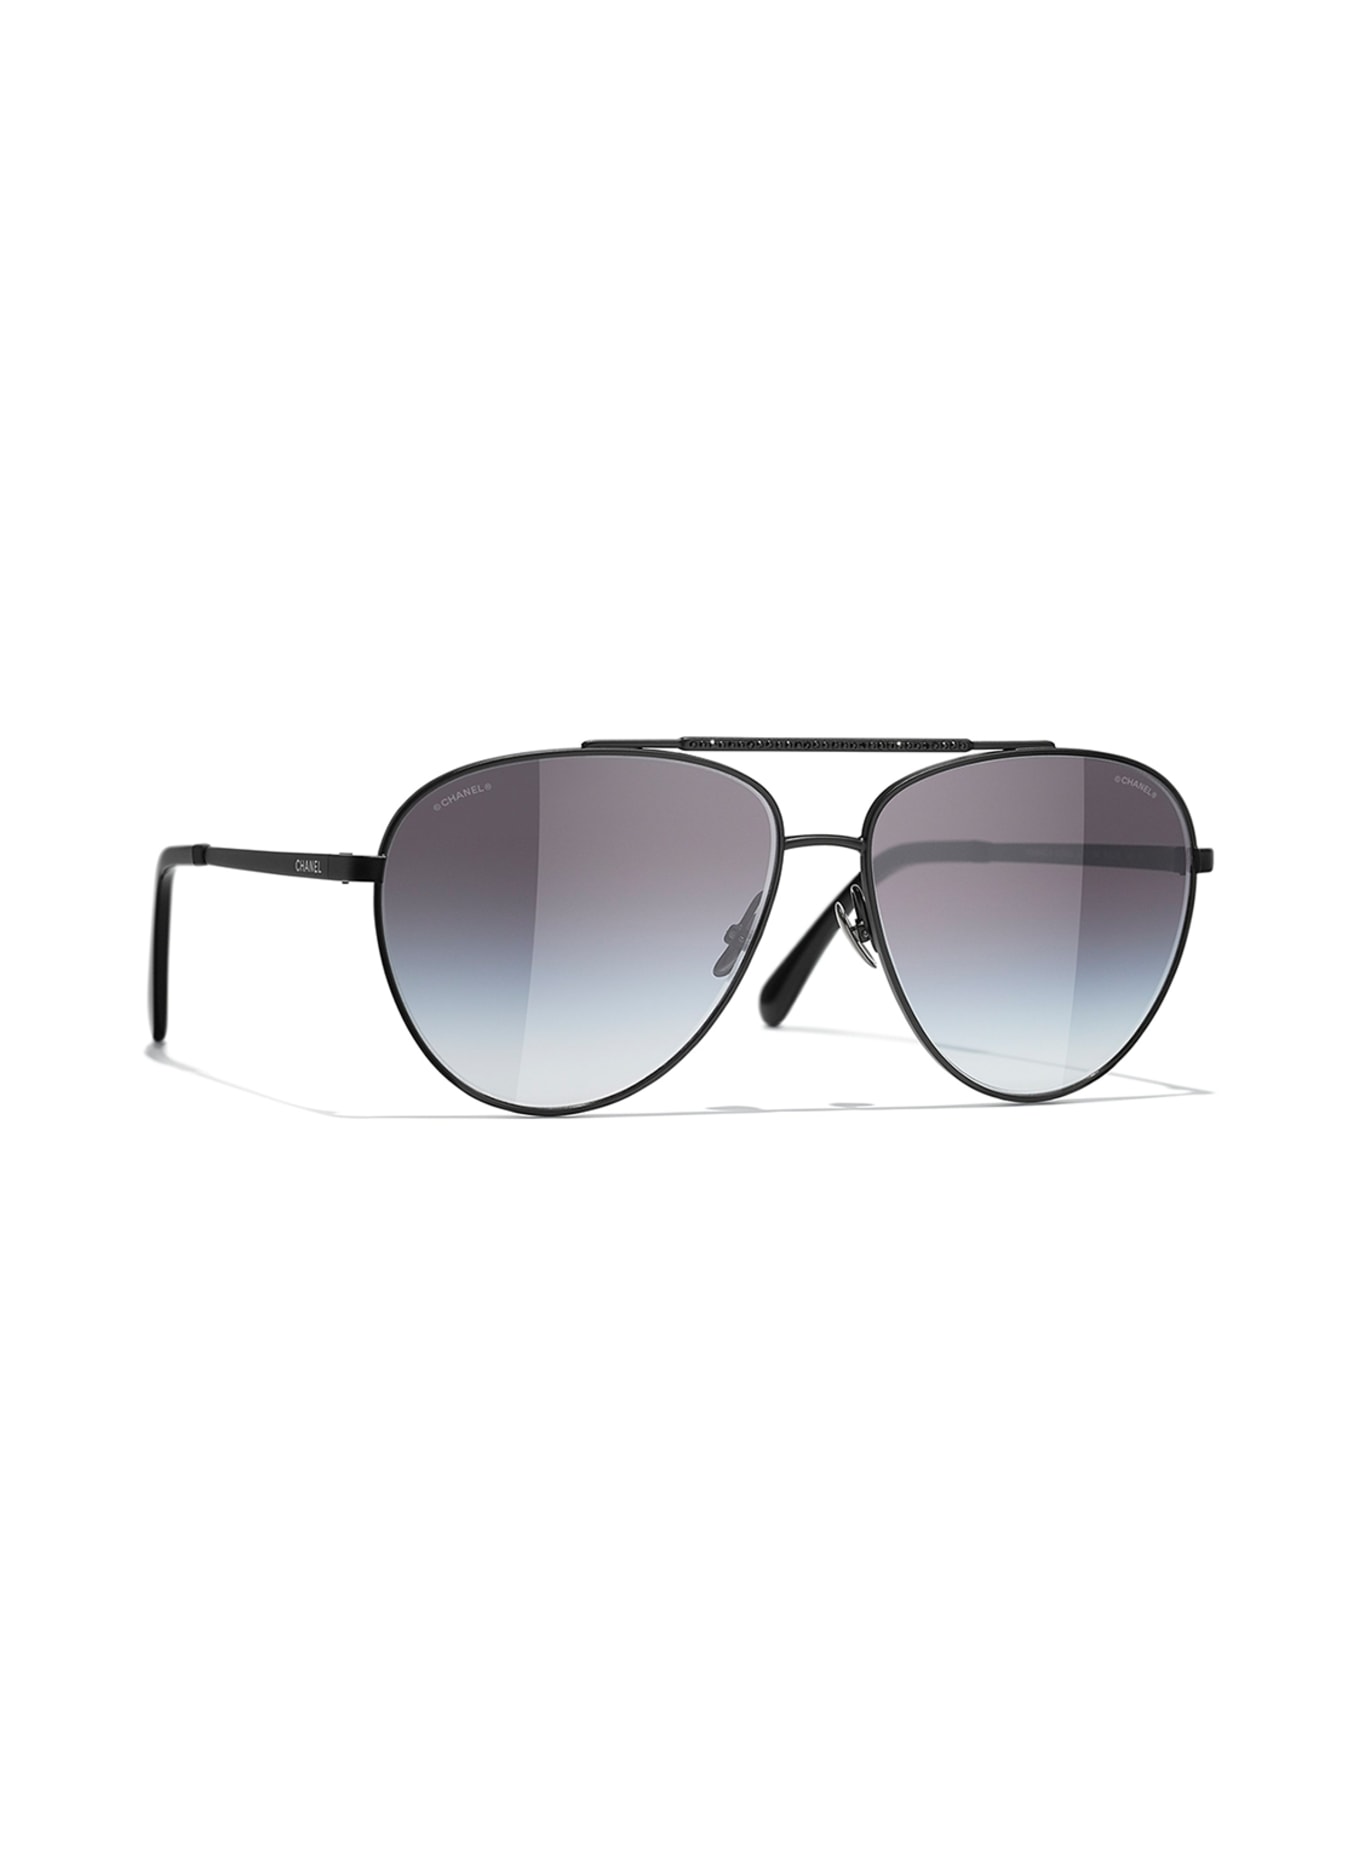 Nordstrom Rack Flash Sale Score Up to 88 Off Designer Sunglasses  E  Online